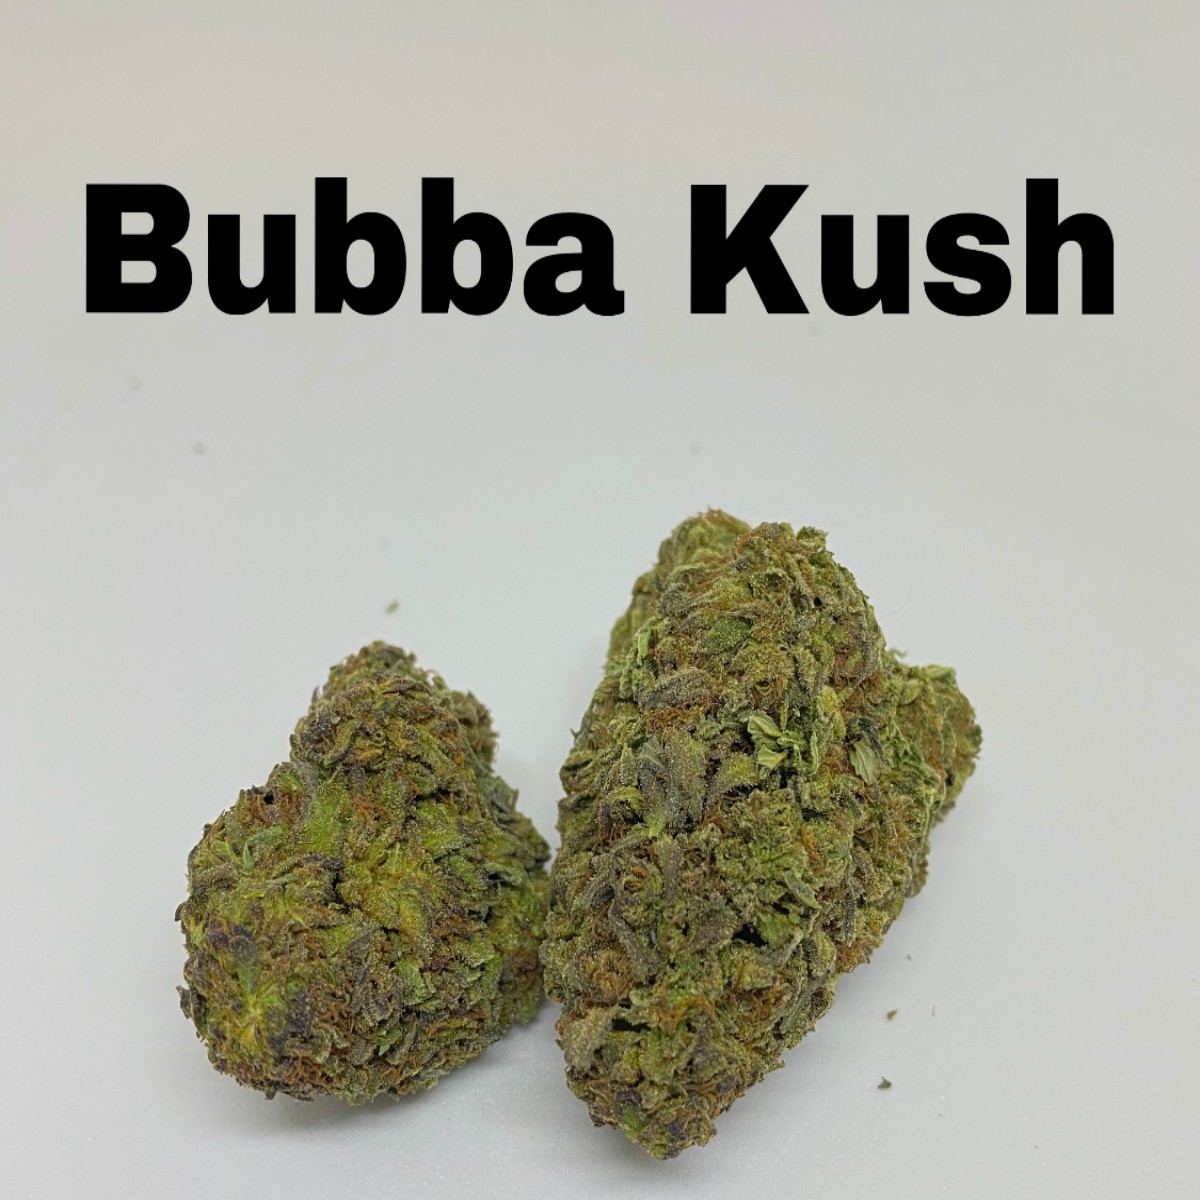 Bubba Kush CBD Hemp Flower